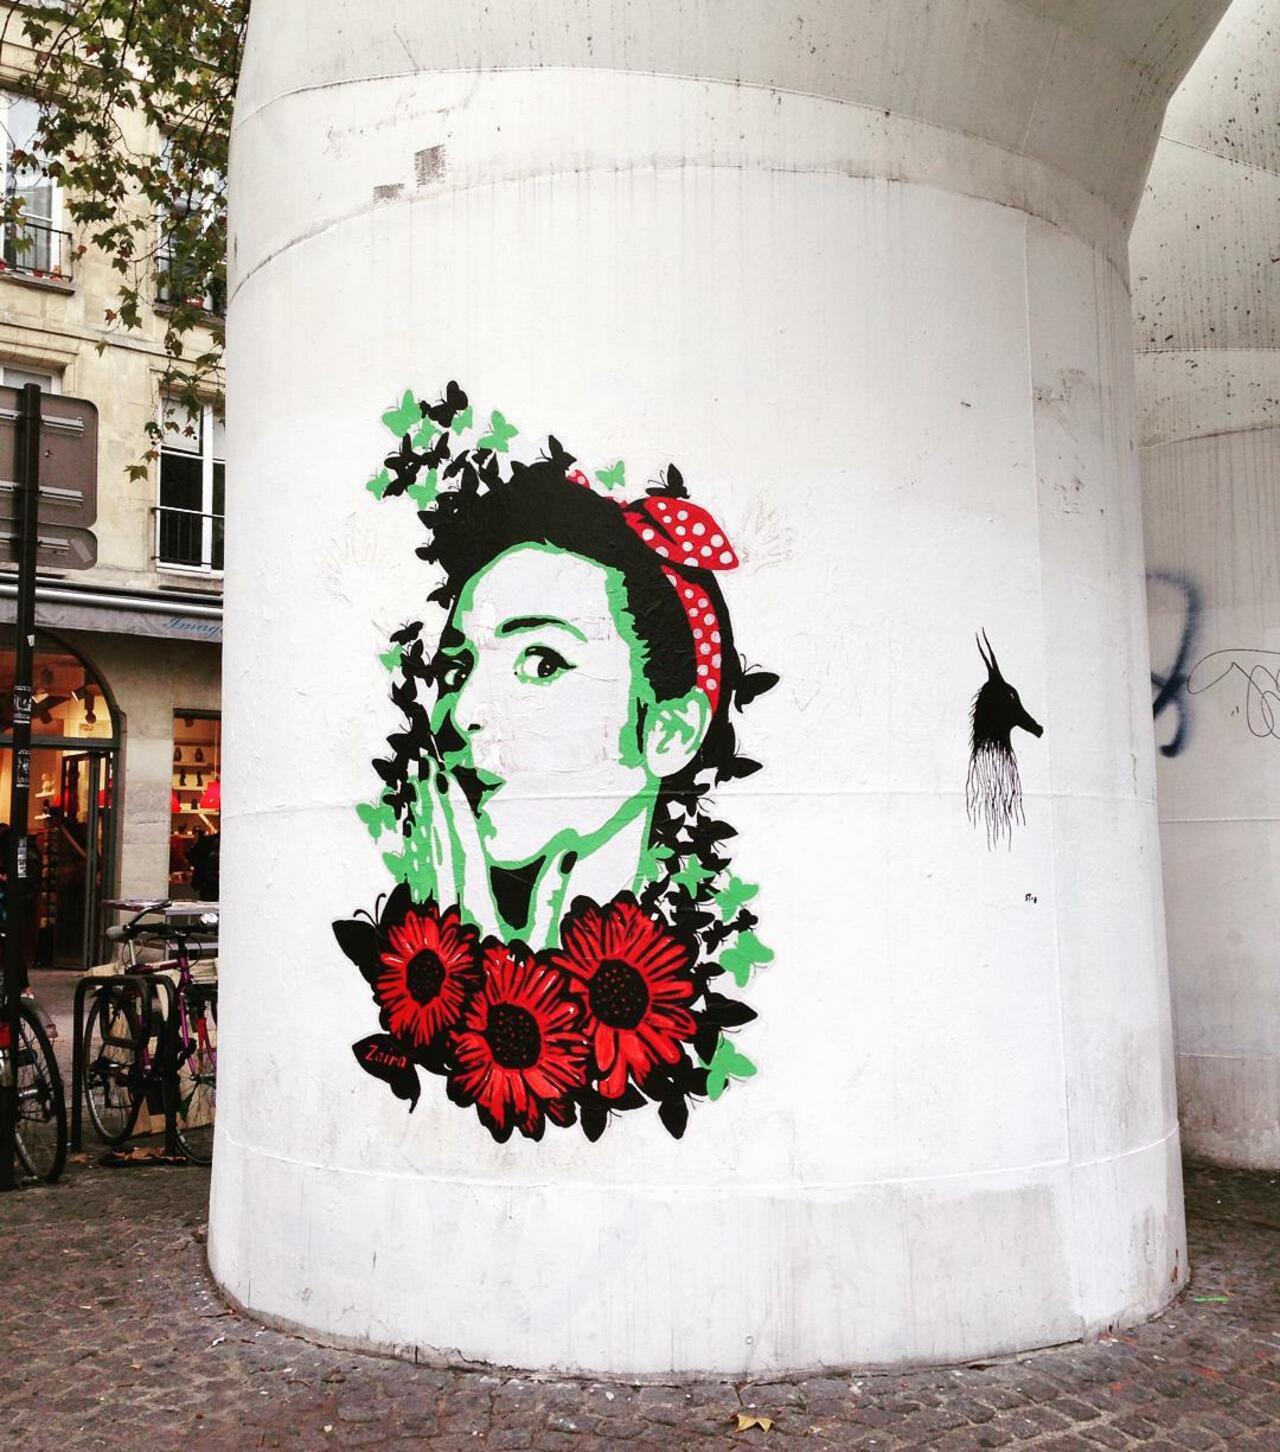 #Paris #graffiti photo by @streetrorart http://ift.tt/1O0H6nK #StreetArt https://t.co/Gp4367ydzd